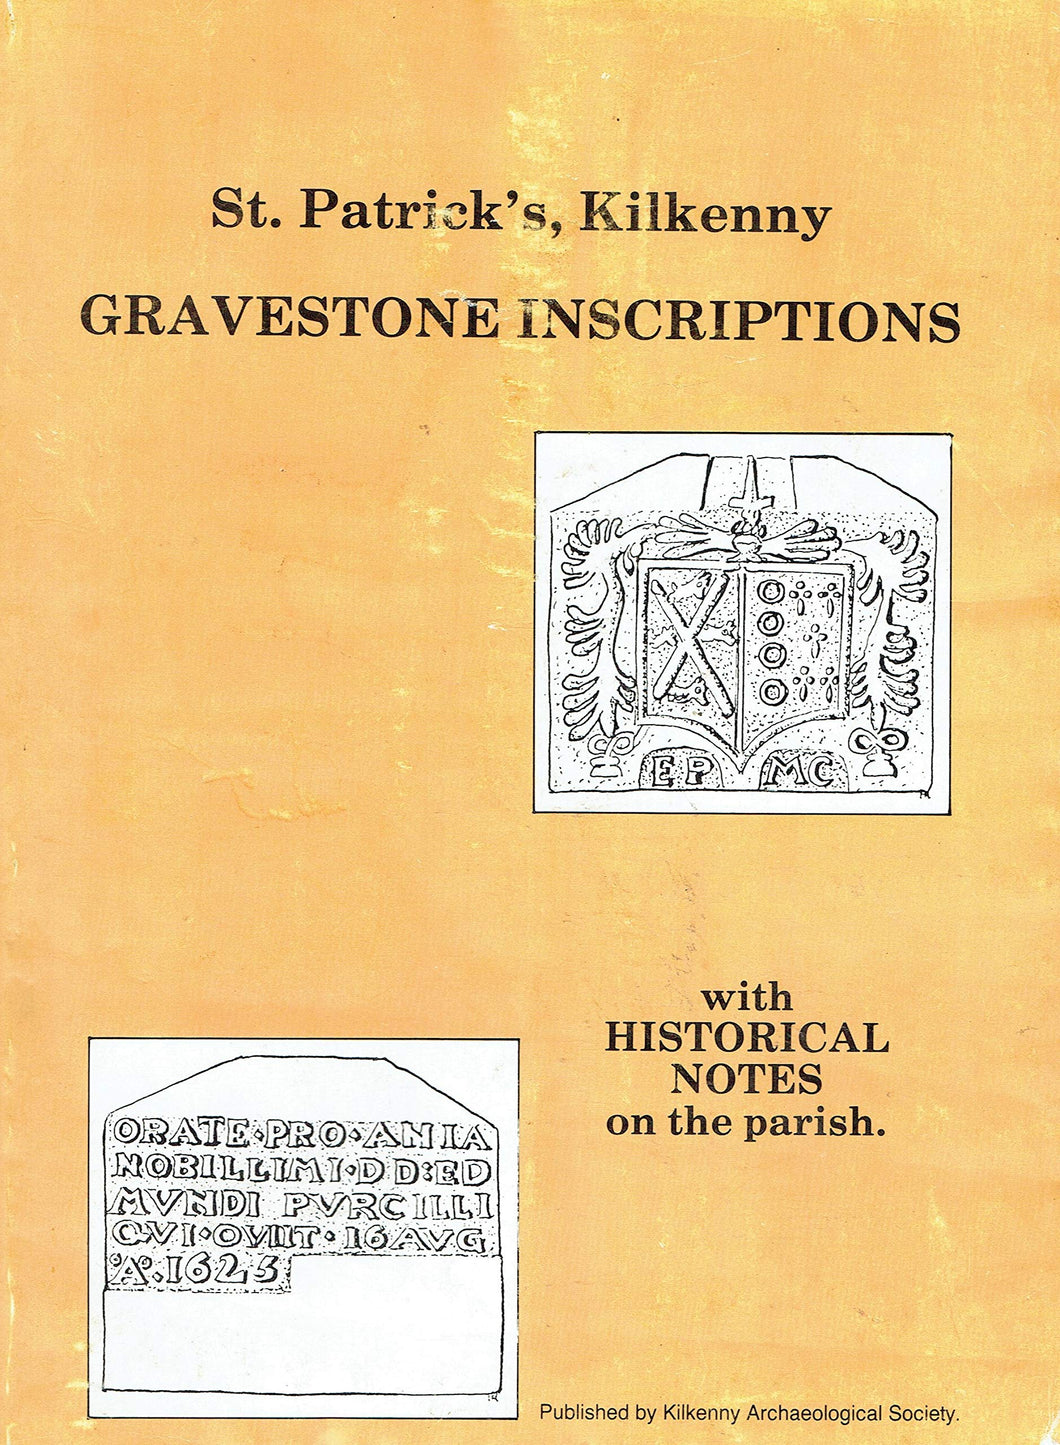 St Patrick's, Kilkenny - Gravestone Inscriptions with Historical Notes on the Parish